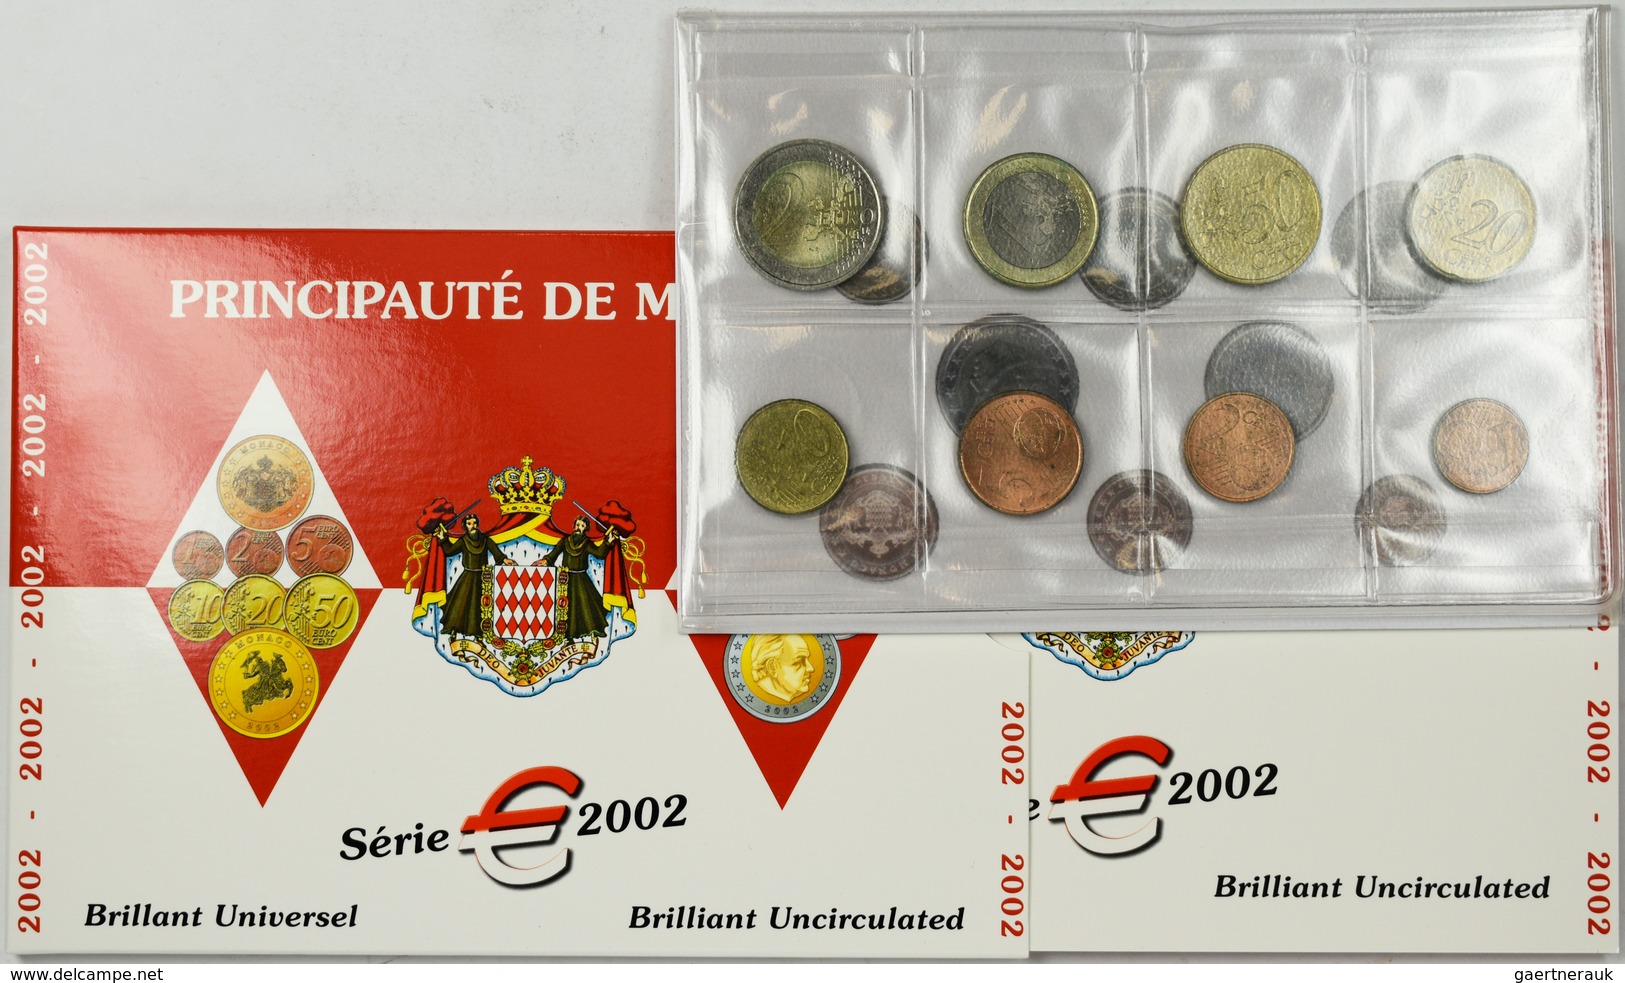 Monaco: Rainier II. 1949-2005: Lot 2 KMS: Lose Münzen 1c - 2 Euro 2001 Im Münzstreifen, Teils Angela - Monaco